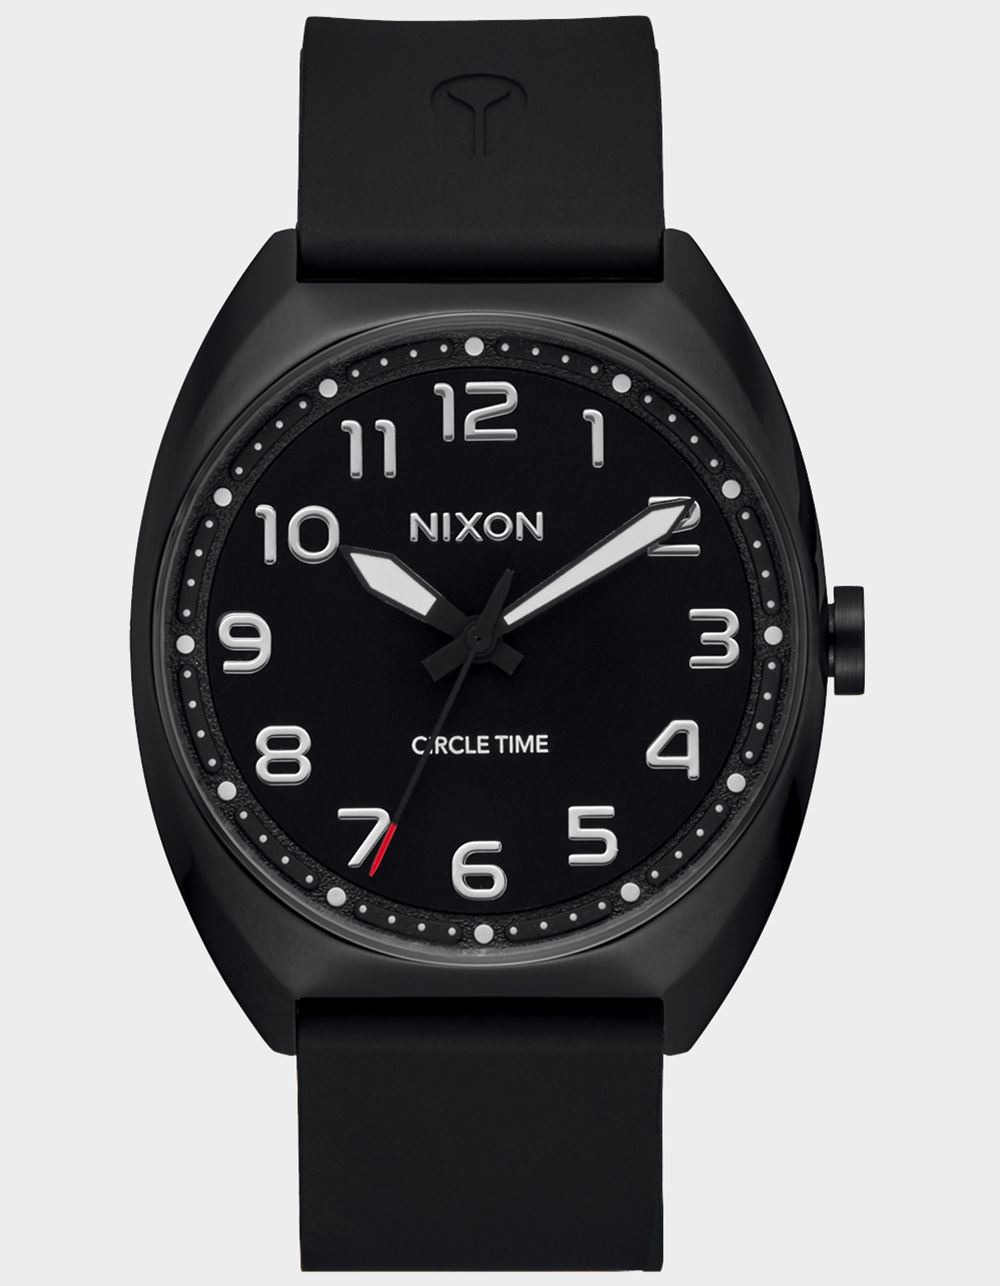 NIXON Mullet Black Watch